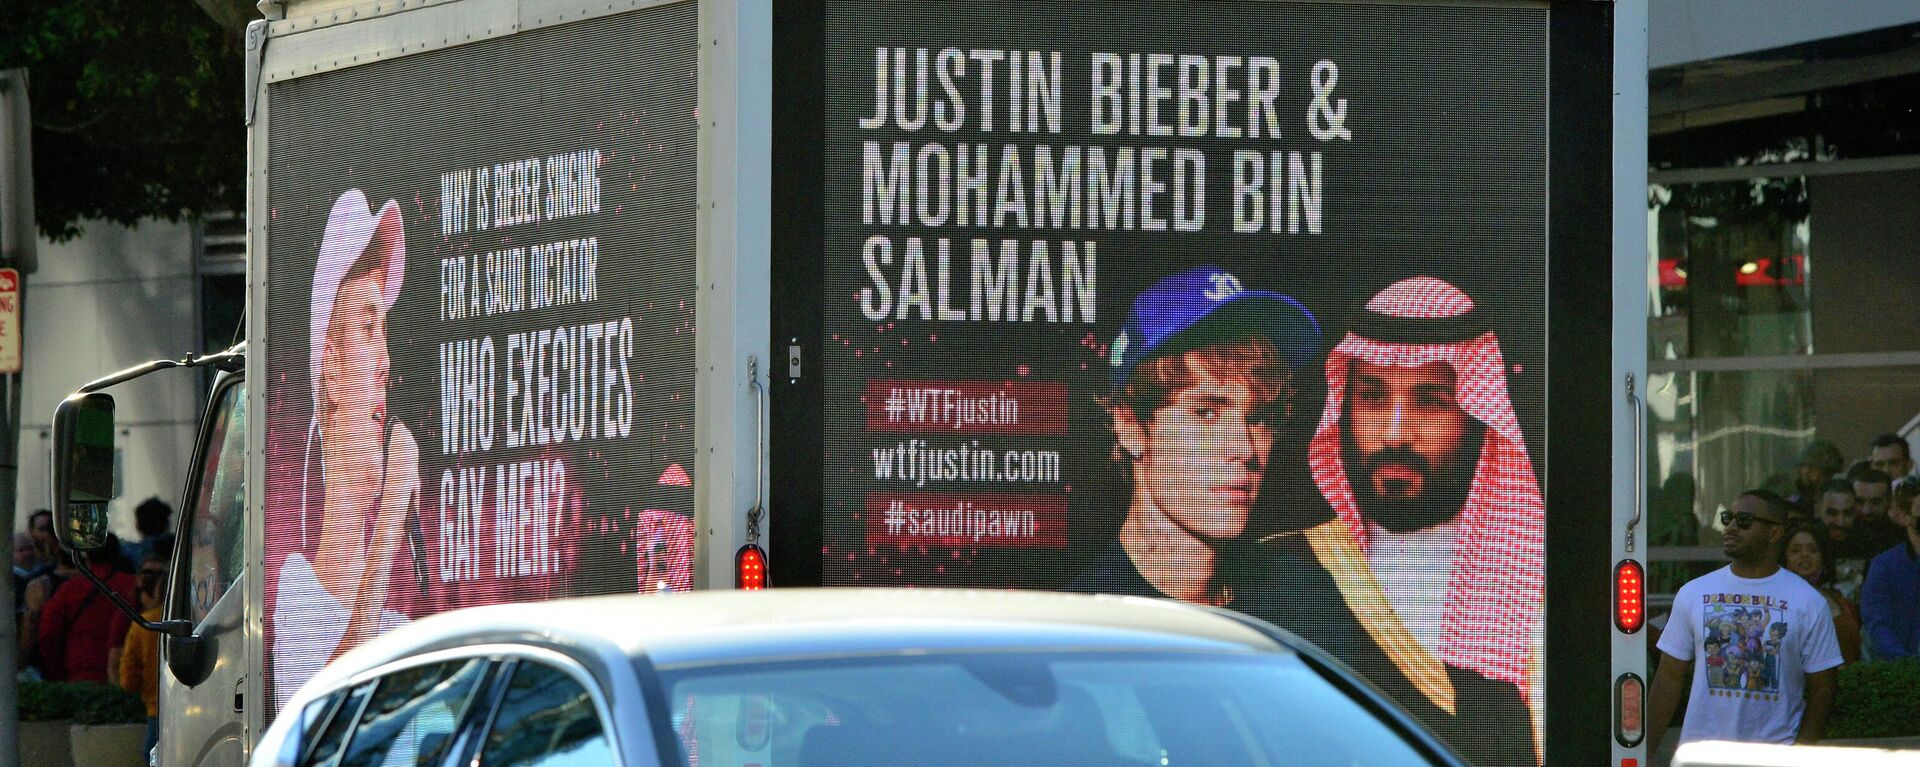 AMobile billboards urging Justin Bieber to cancel his upcoming concert in Saudi Arabia near the Microsoft Theater on November 21, 2021 in Los Angeles, California.  - Sputnik International, 1920, 22.11.2021